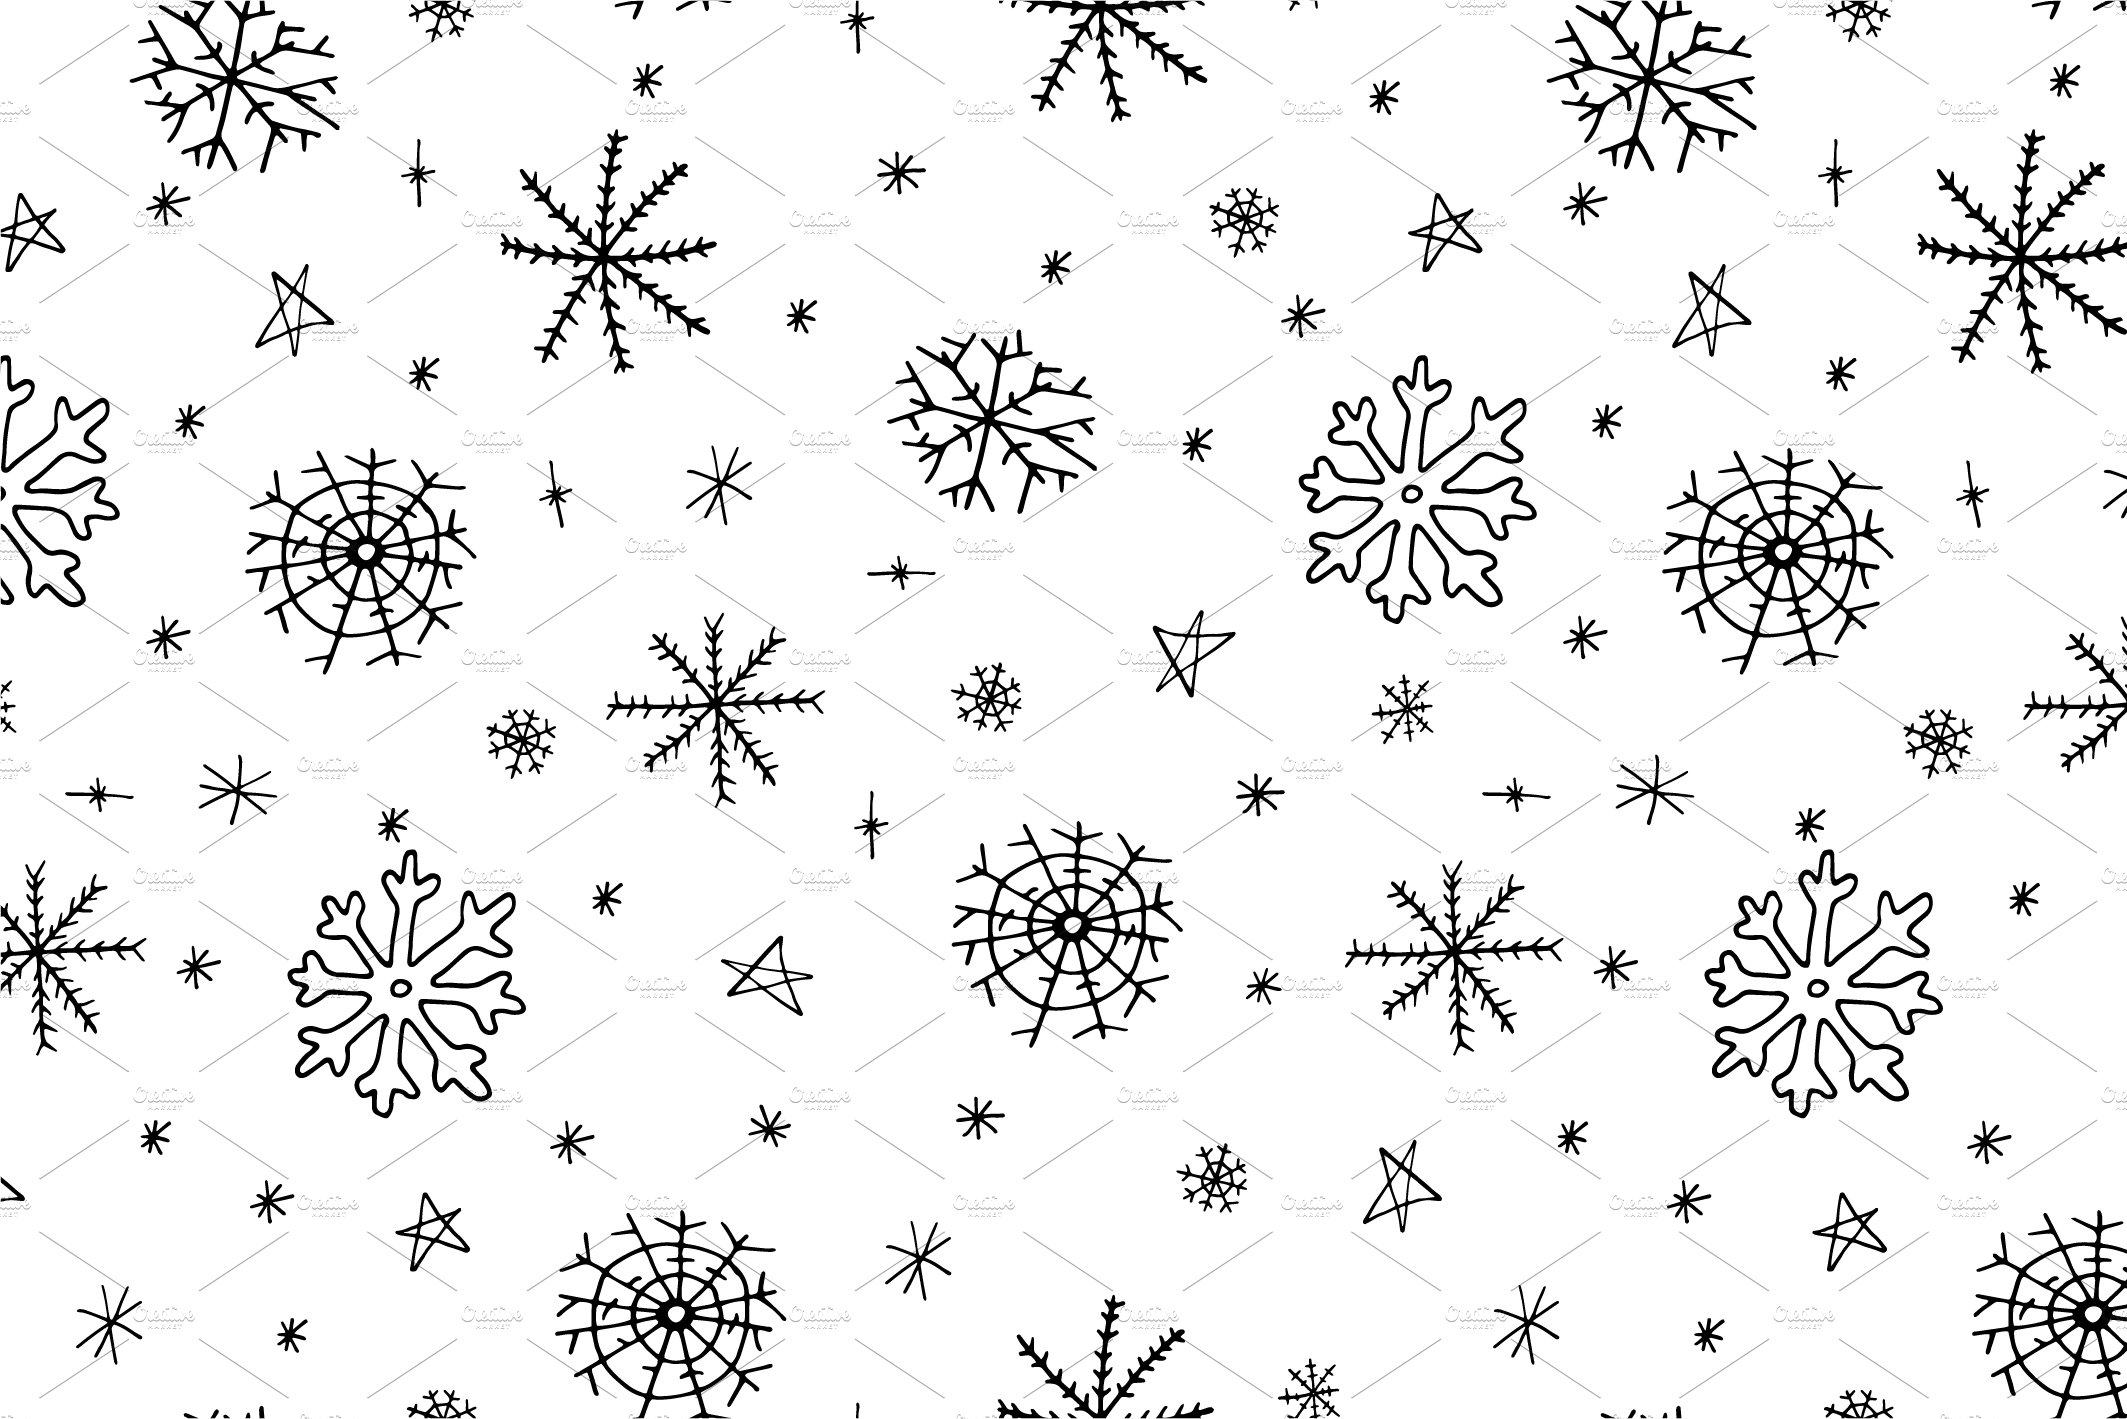 Black snowflakes for winter illustration.